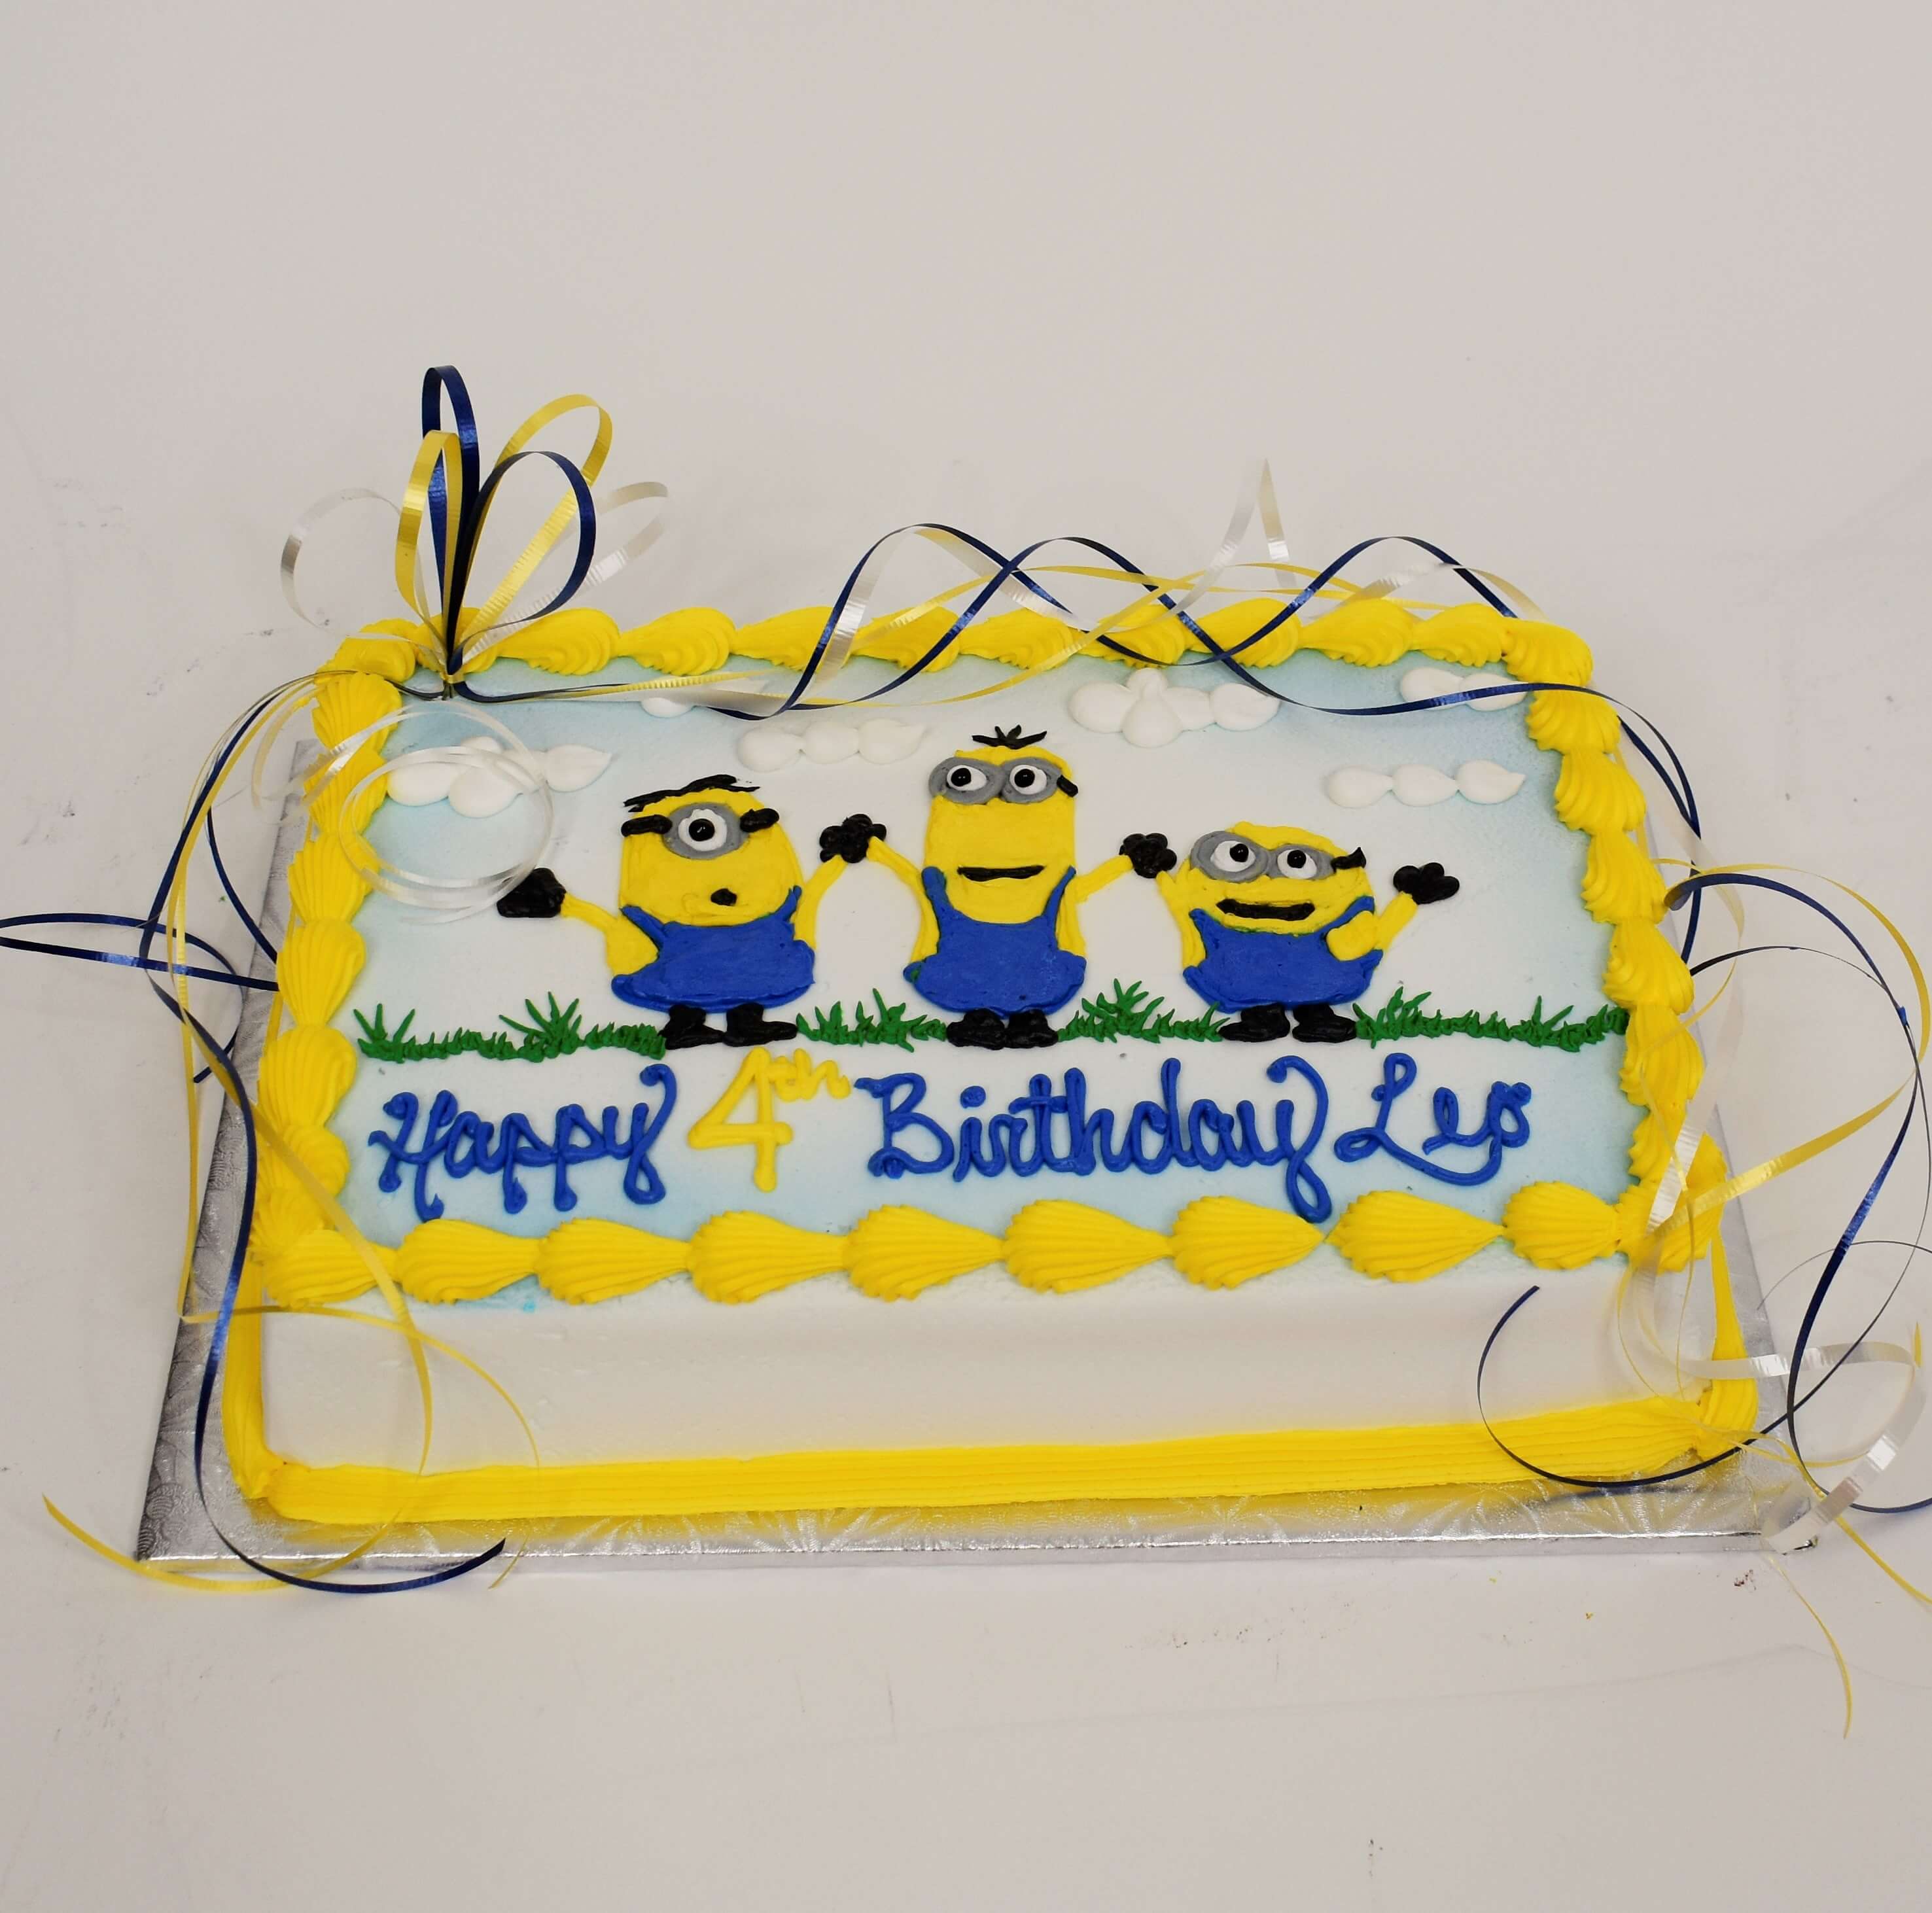 McArthur's Bakery Custom Cake With Three Minions Celebrating